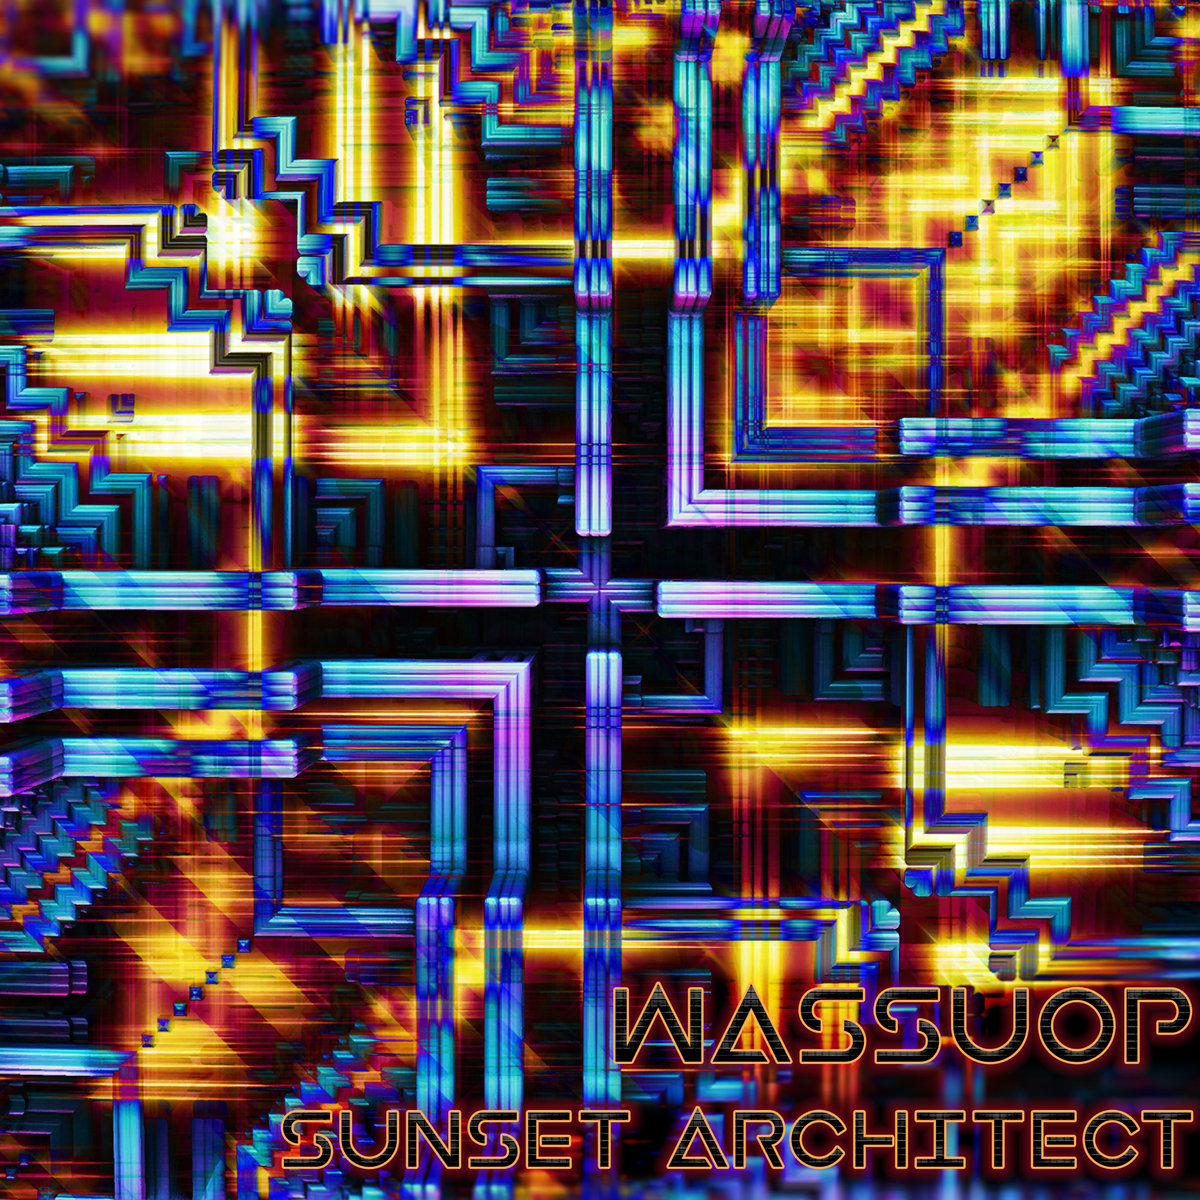 wassuop - Balderdash @ 'Sunset Architect' album (bass, electronic)